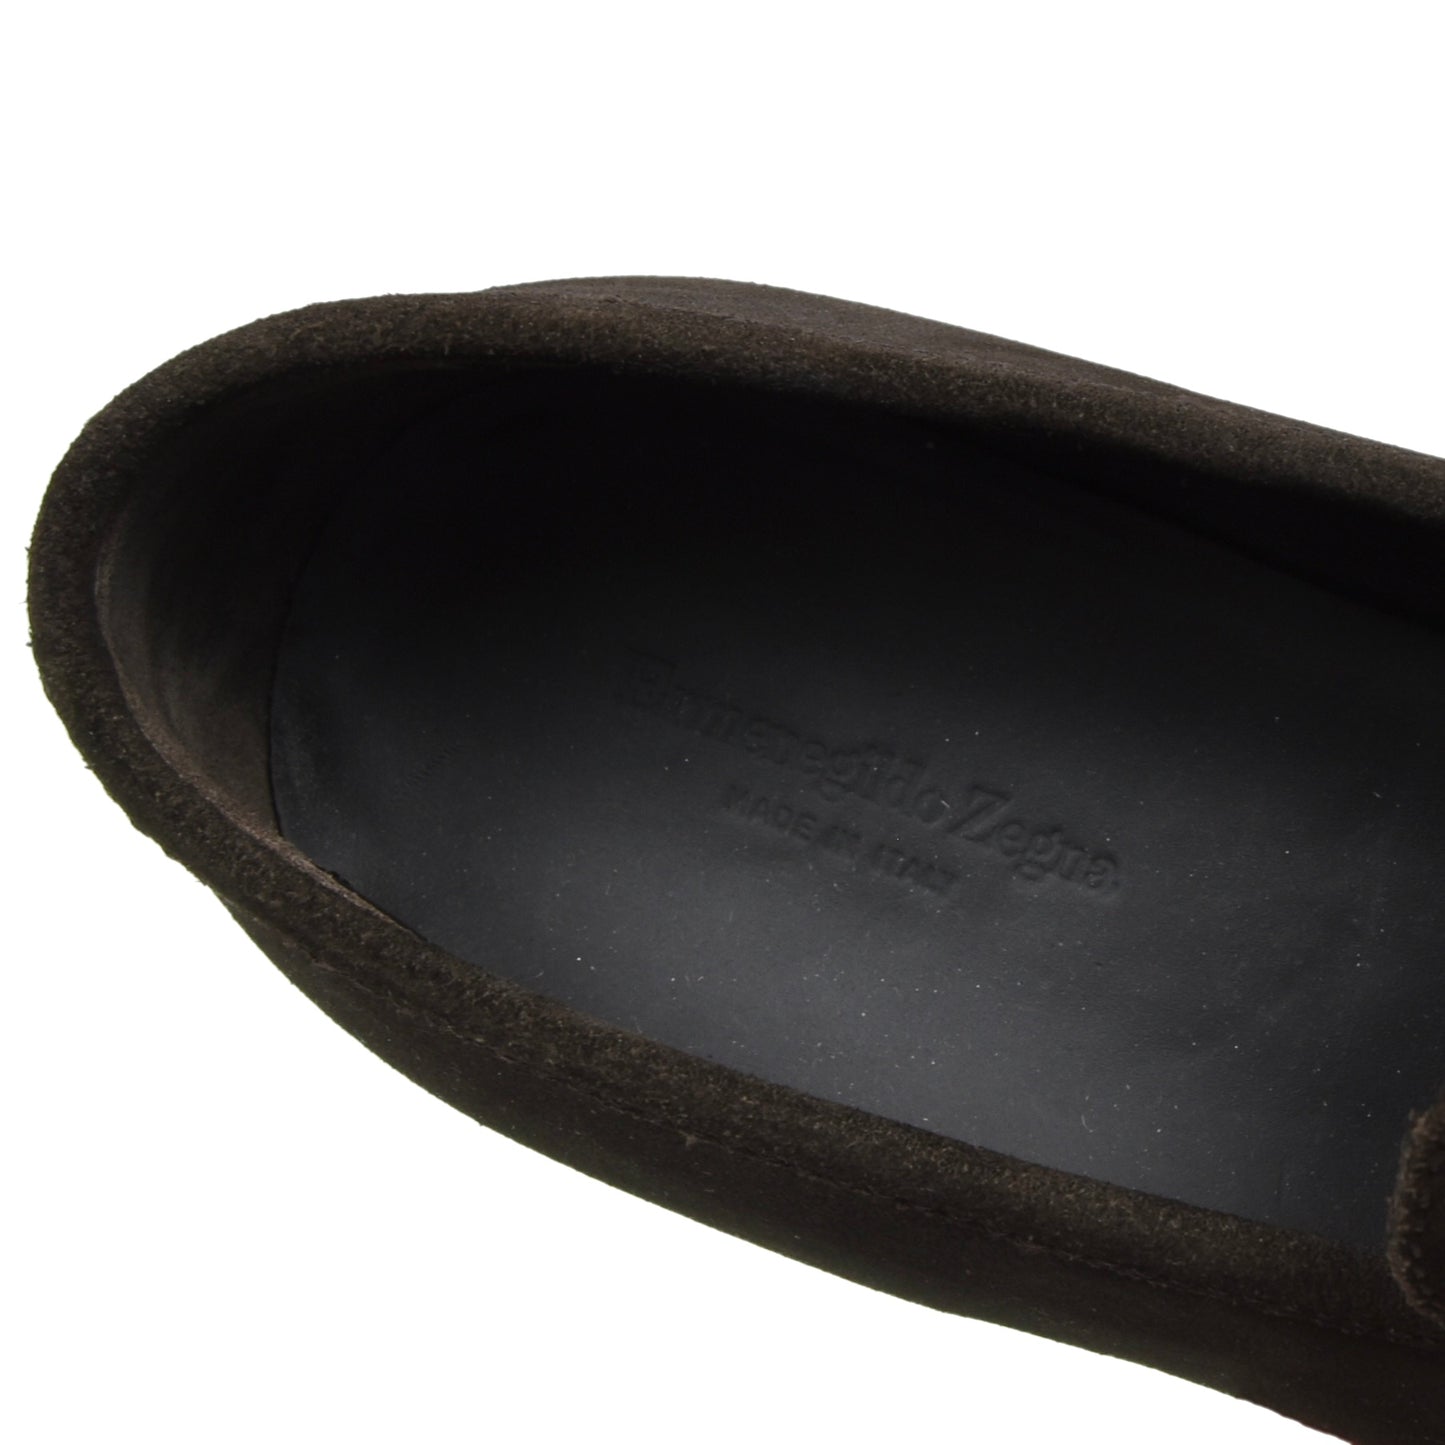 Ermenegildo Zegna Suede Loafers Size 9 1/2 EE - Brown